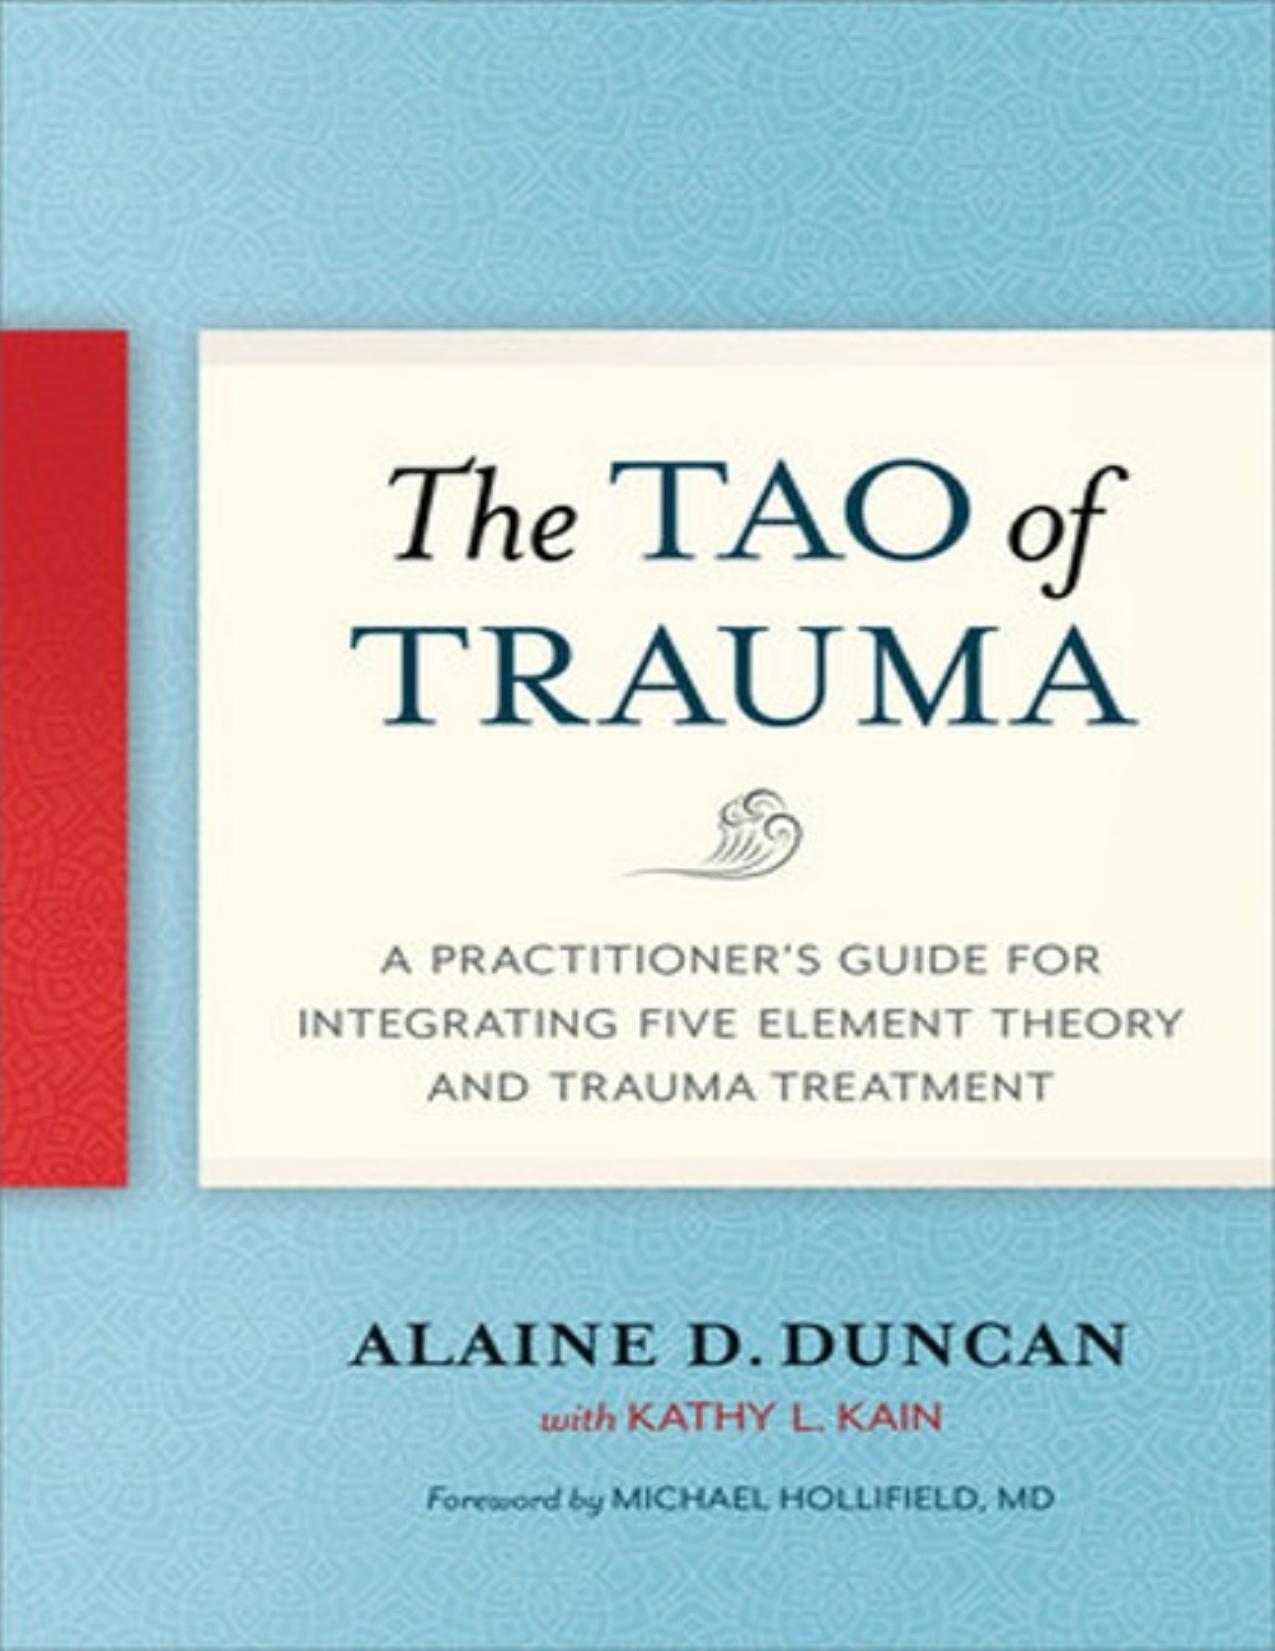 Tao of Trauma: A Practitionerâs Guide for Integrating Five Element Theory and Trauma Treatment - PDFDrive.com by Alaine D. Duncan & Kathy L. Kain